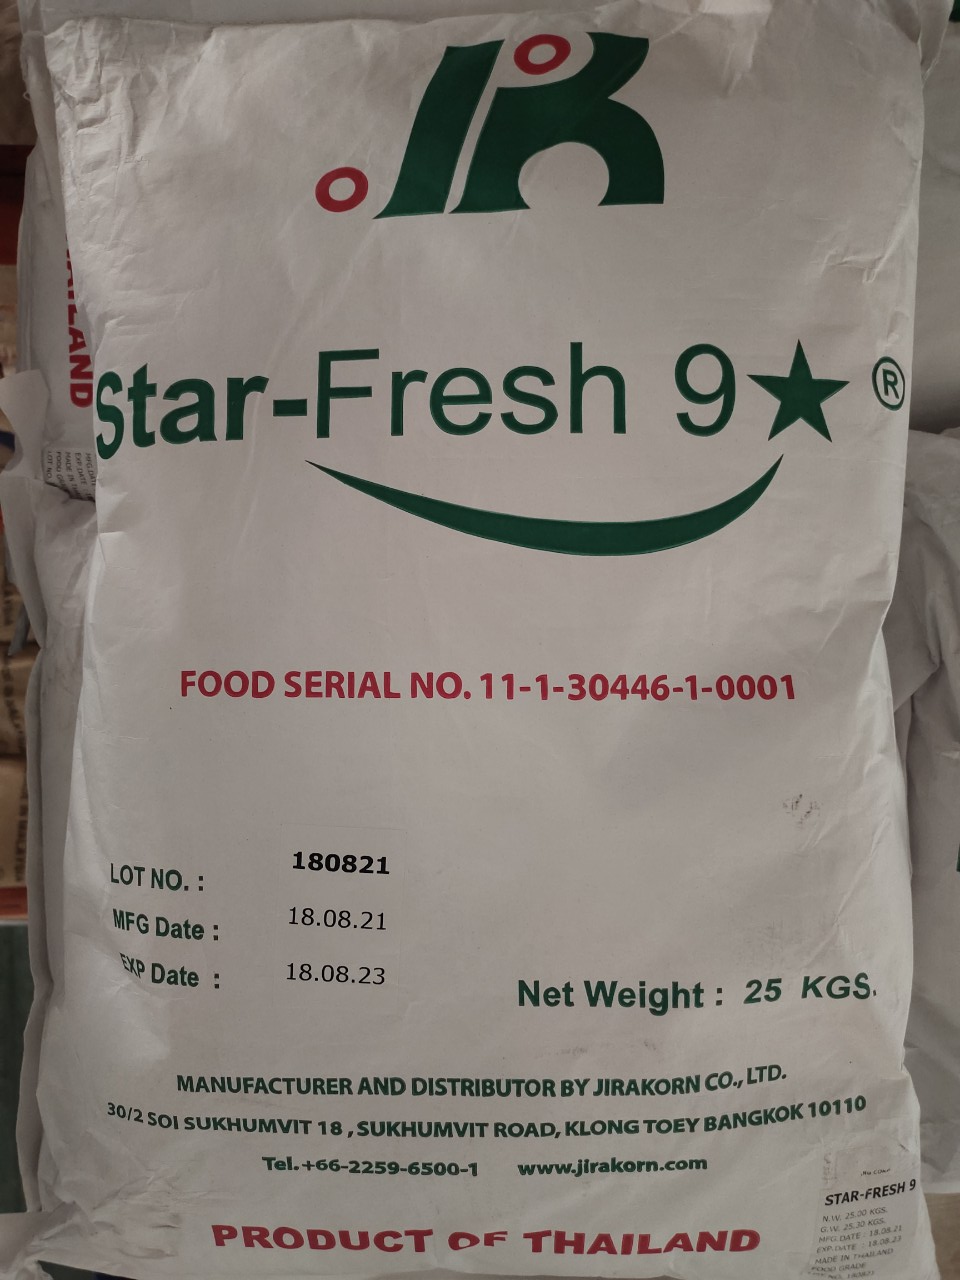 Phụ gia bảo quản rau củ quả Star-Fresh 9 do Navico cung cấp